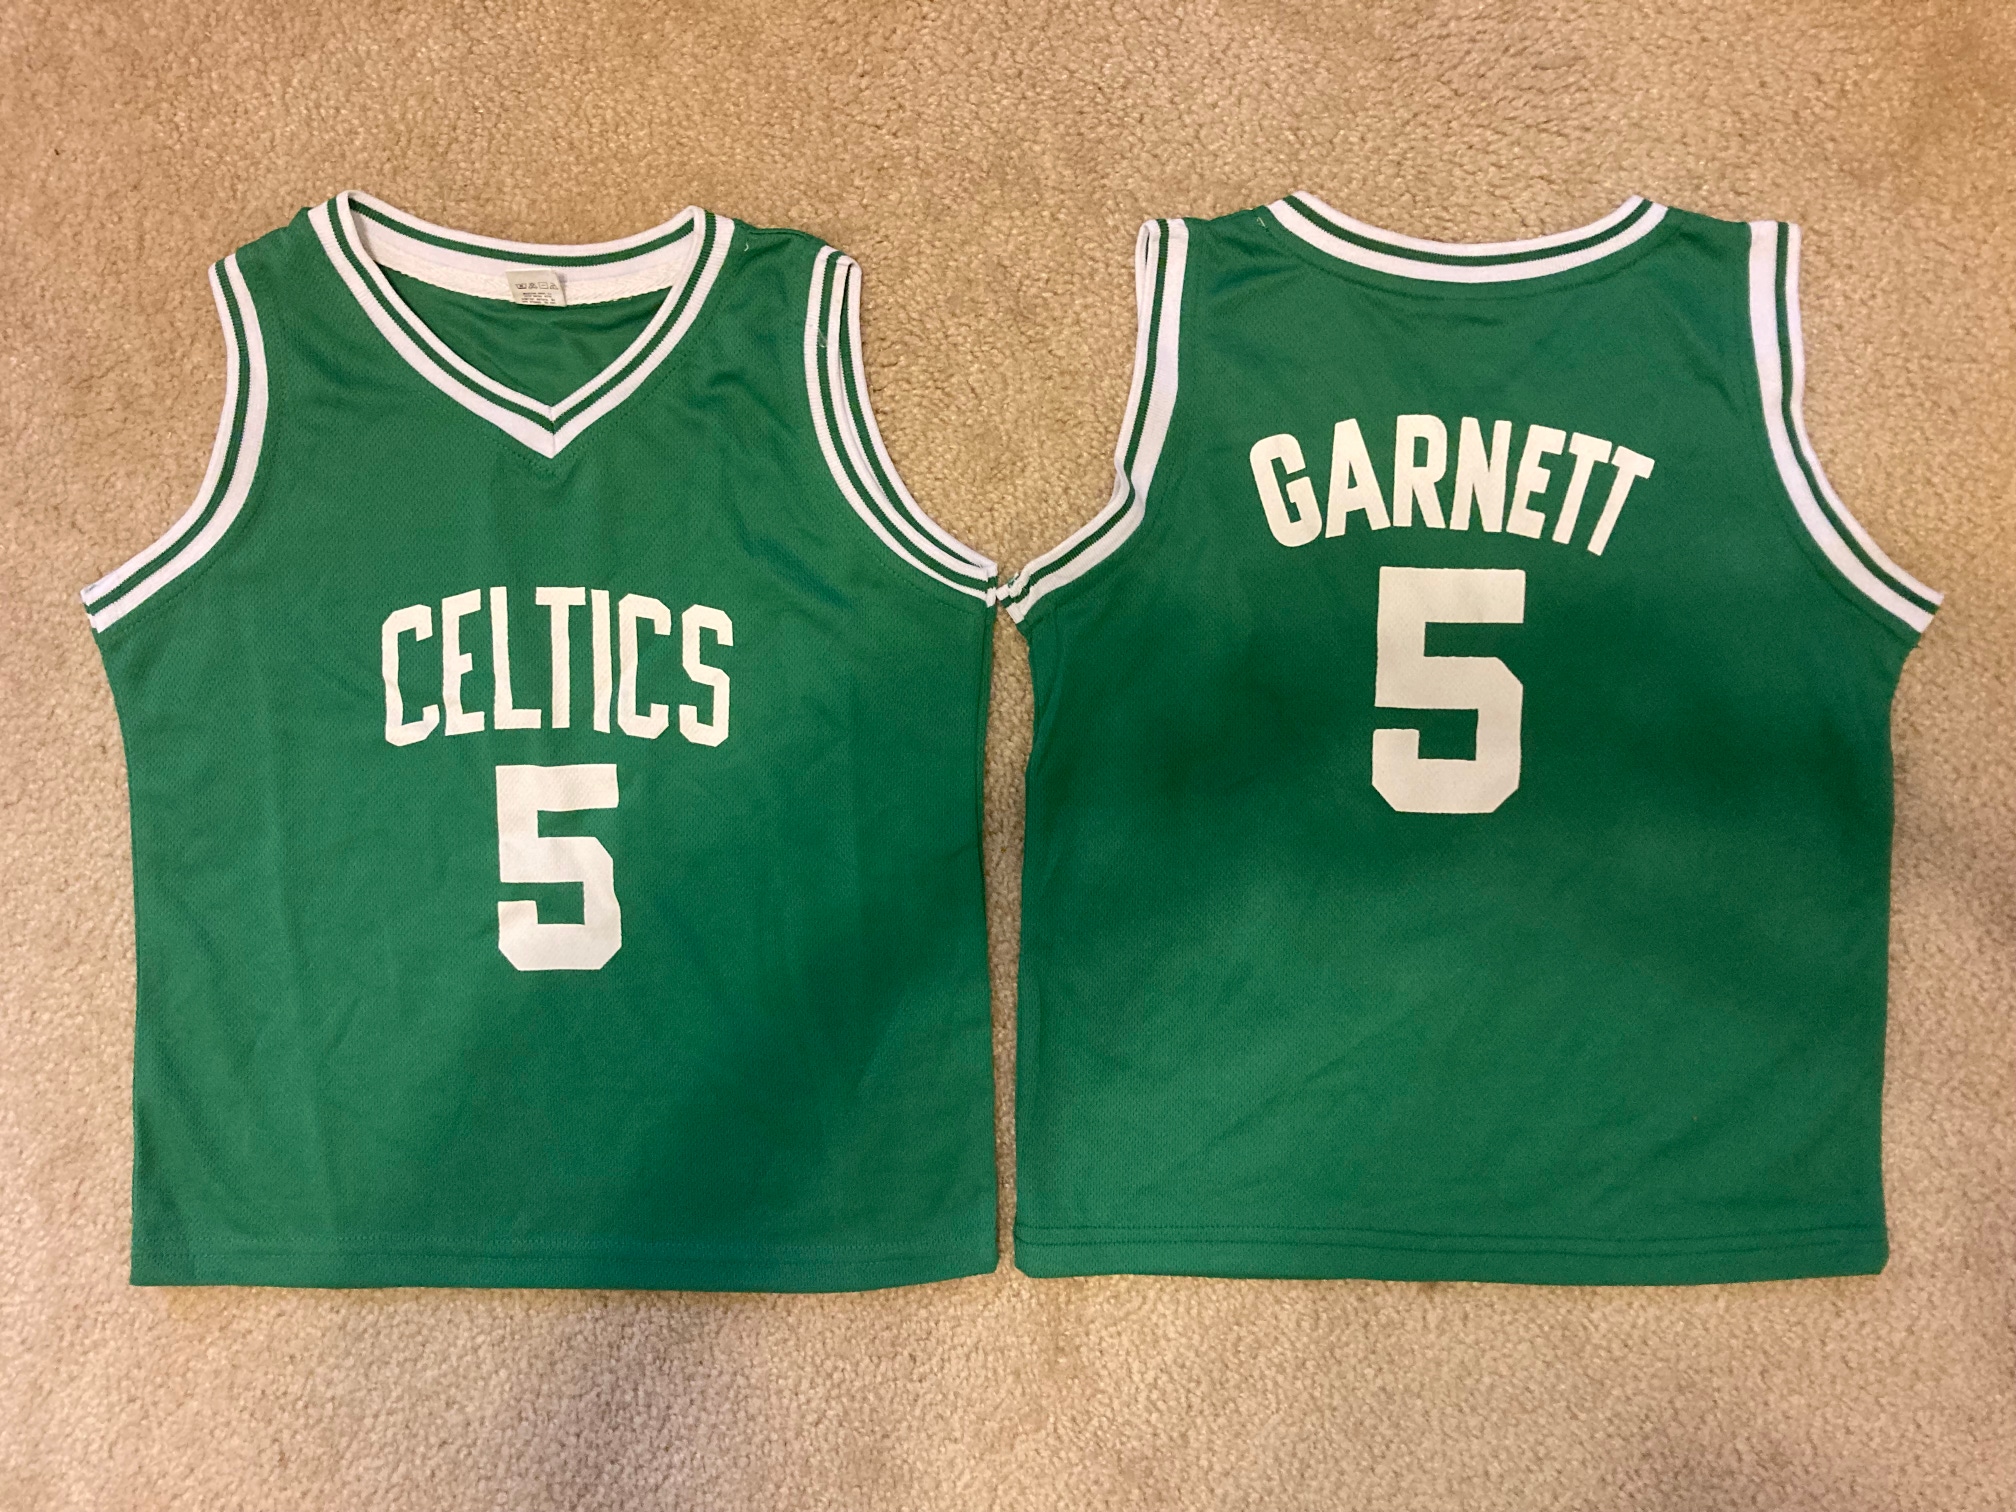 Youth Kids Garnett Jersey - Celtics Basketball - Size Boys 5-6